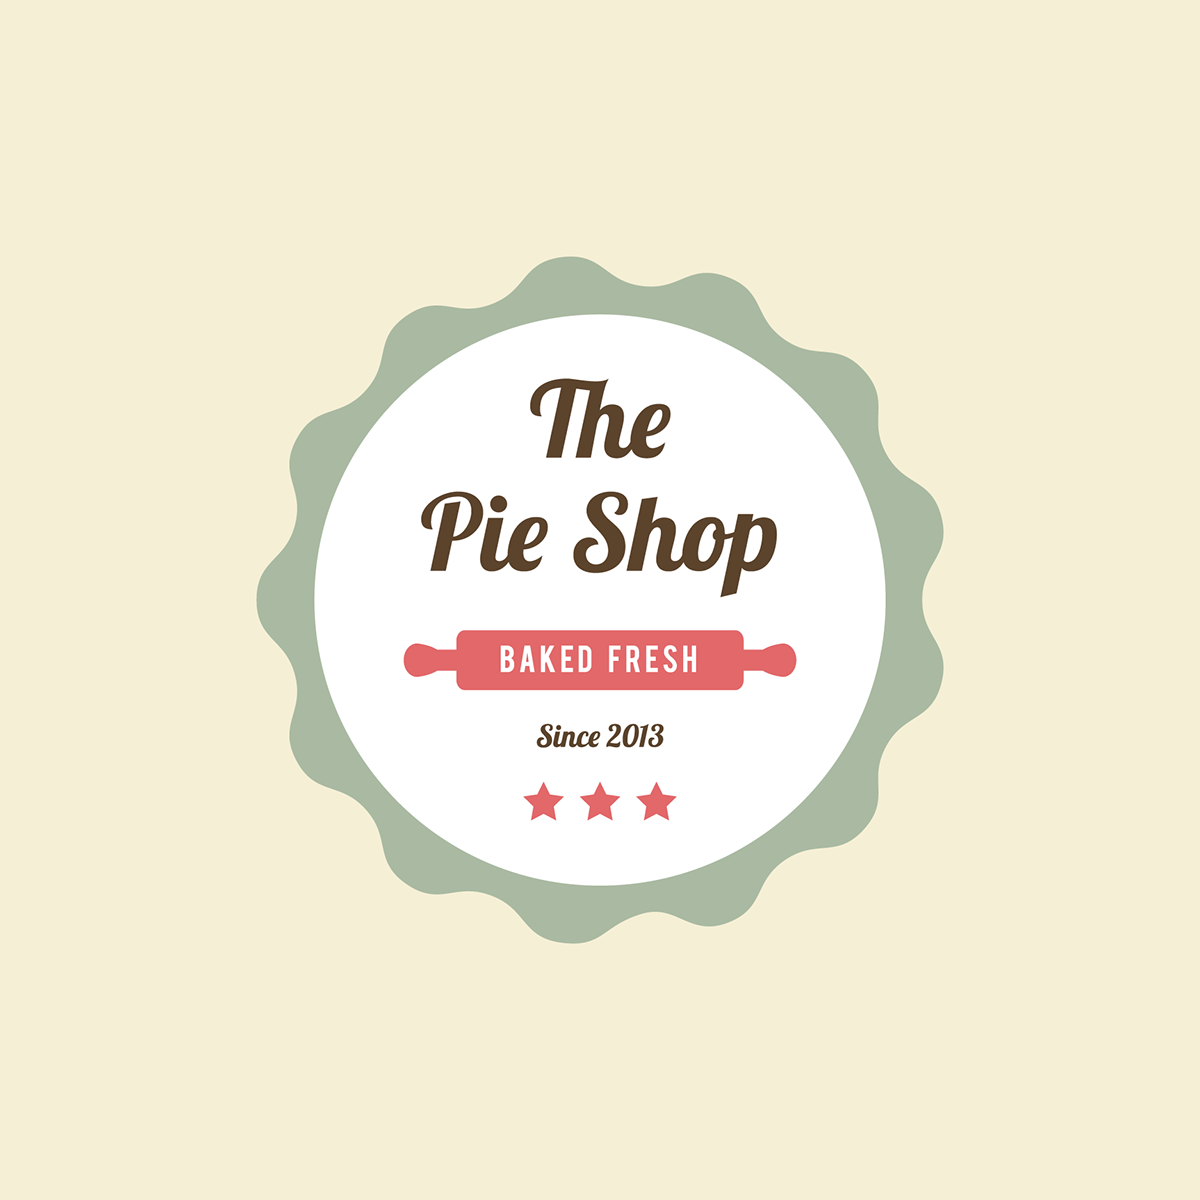 The Pie Shop pie shop Kuwait pie kuwait logo